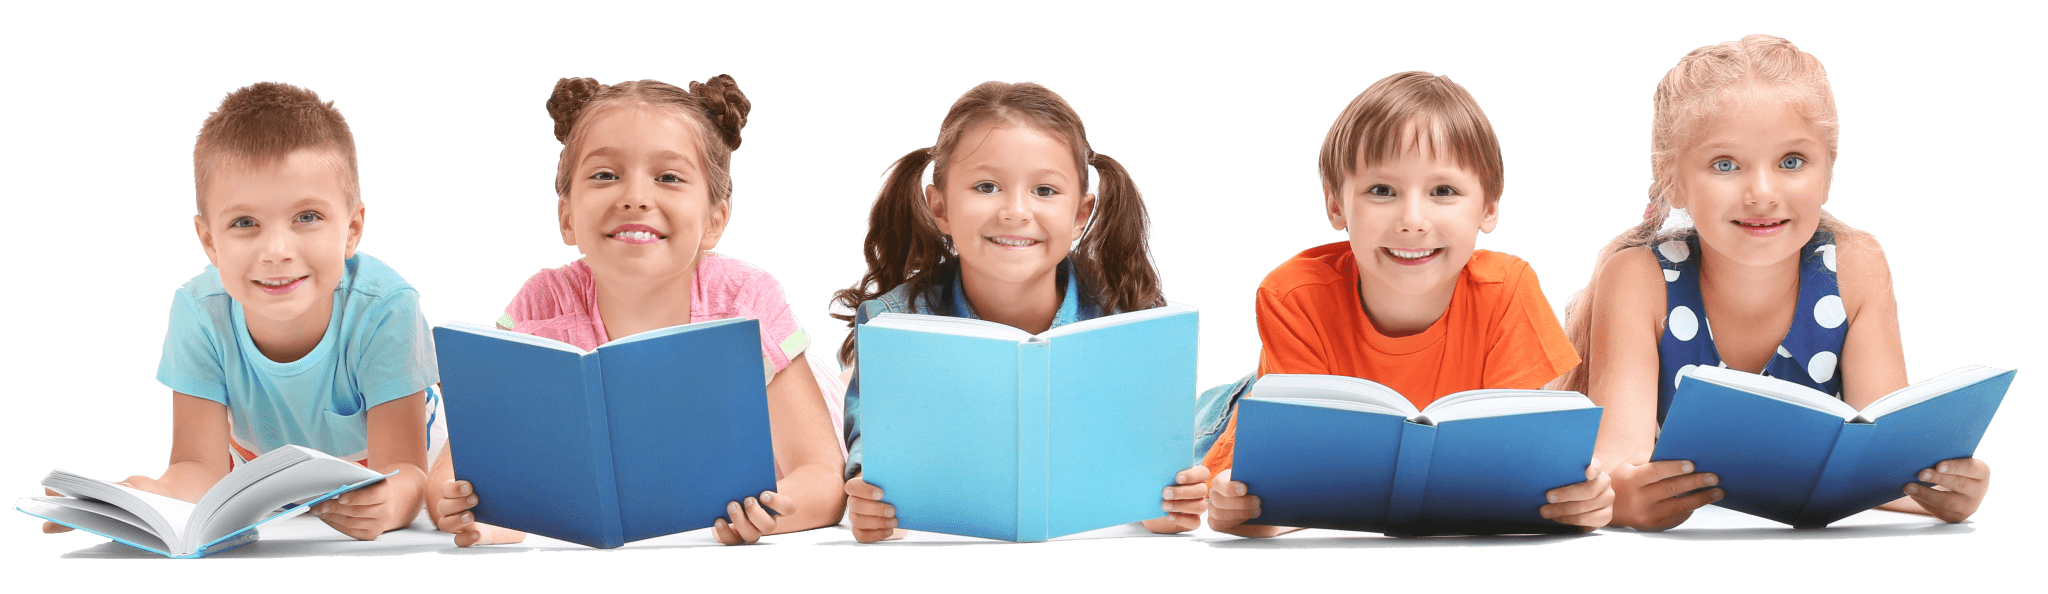 Happy 5 children reading a book